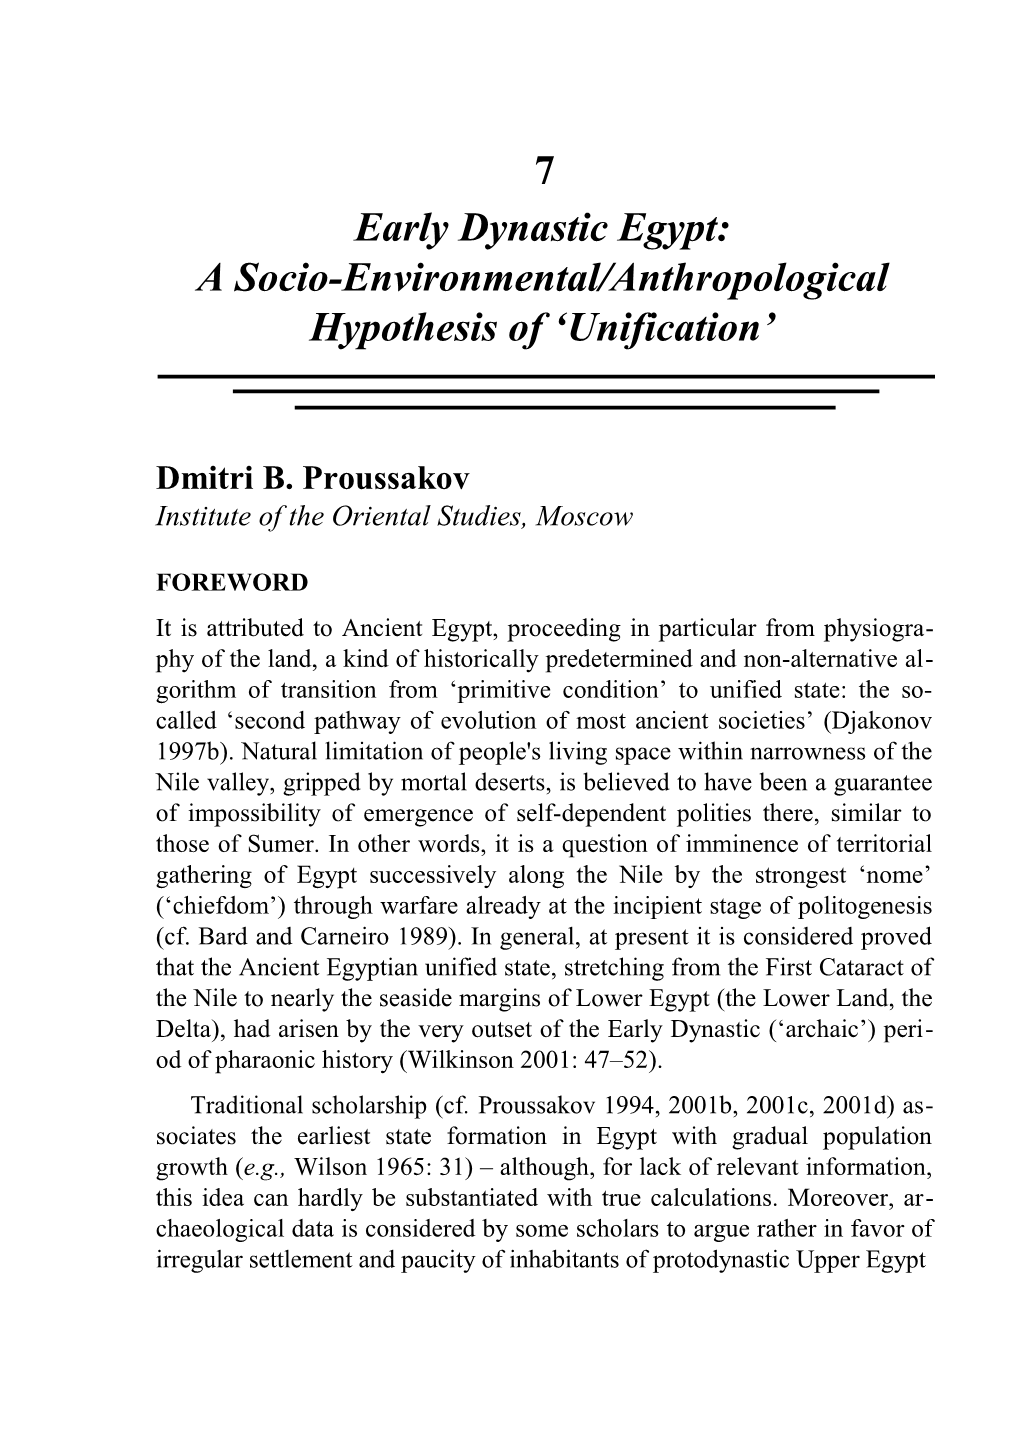 Proussakov / Early Dynastic Egypt 1